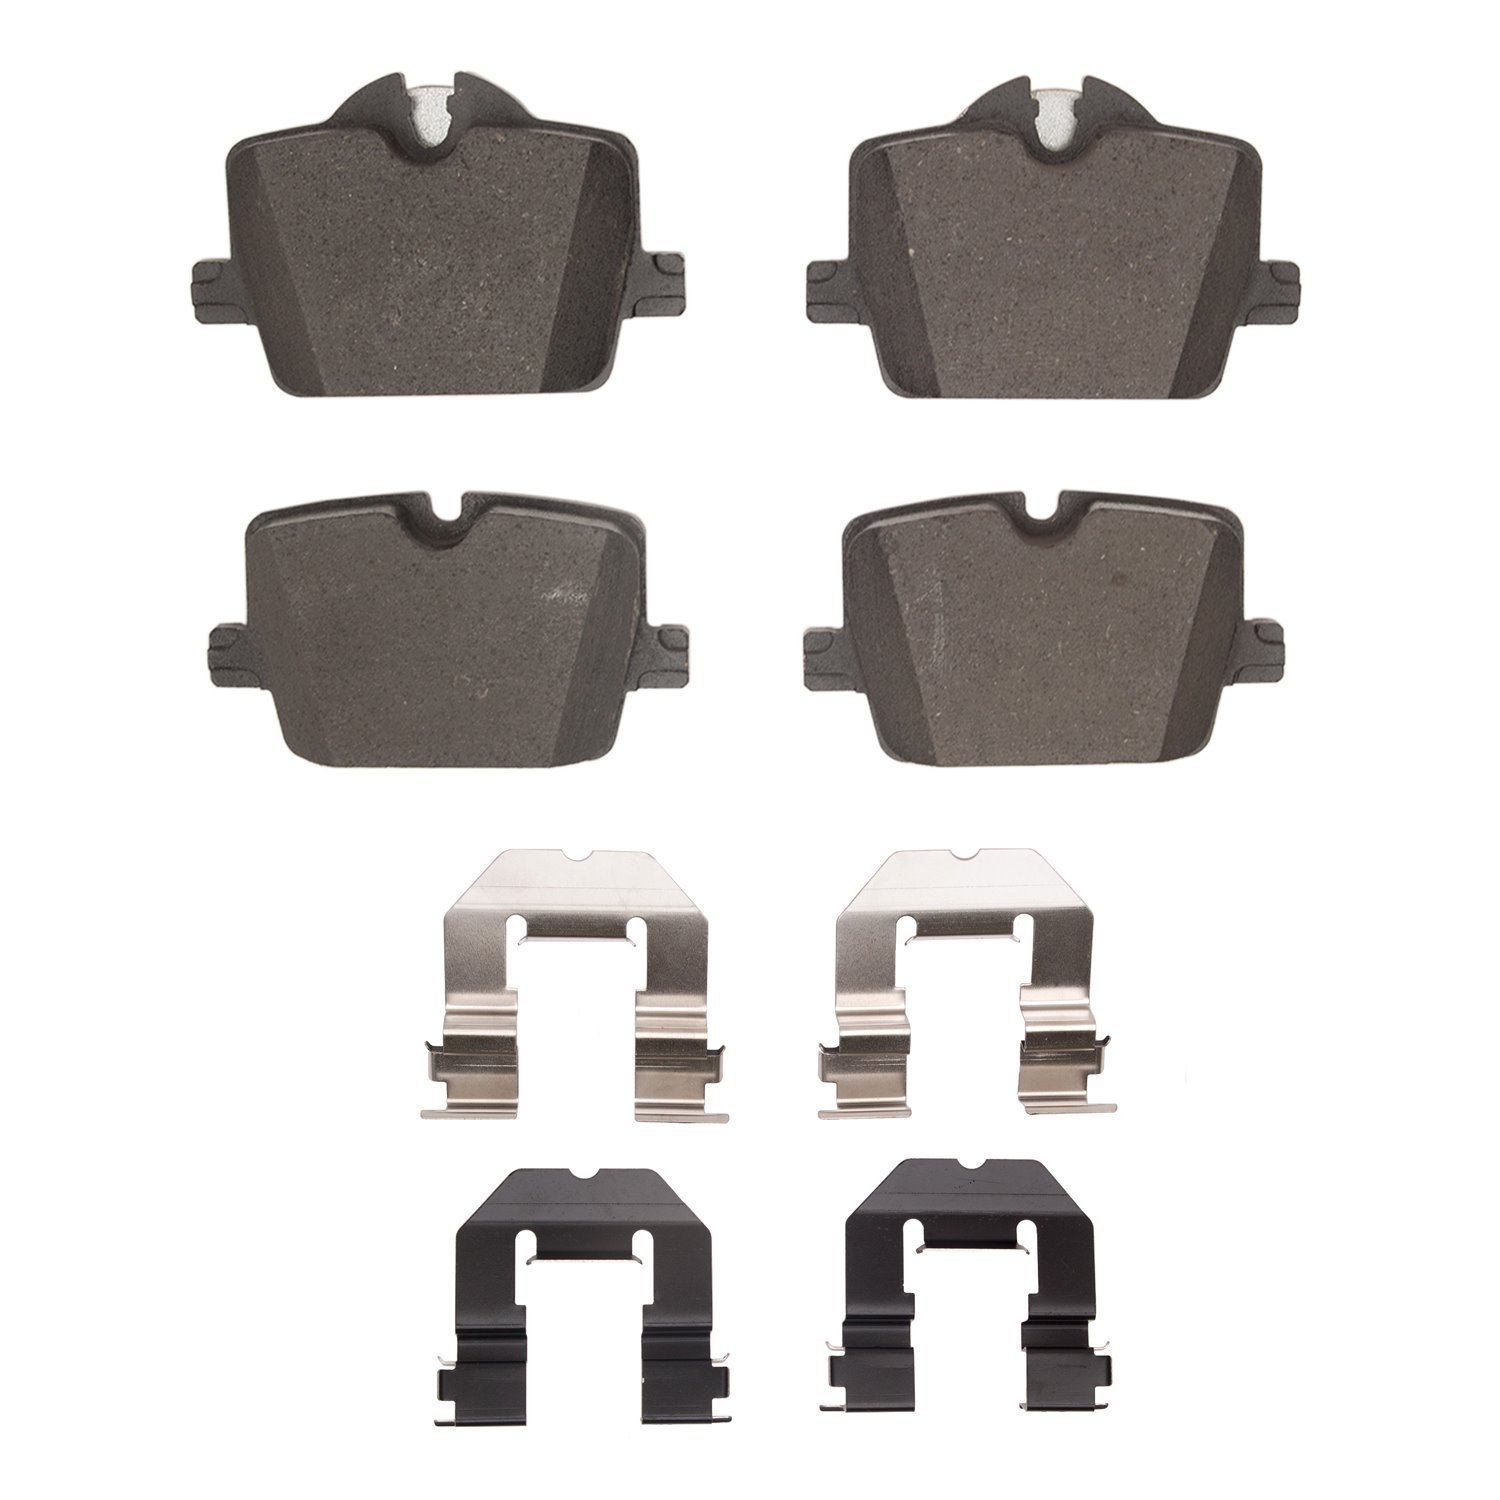 1600-2221-01 5000 Euro Ceramic Brake Pads & Hardware Kit, Fits Select Multiple Makes/Models, Position: Rear